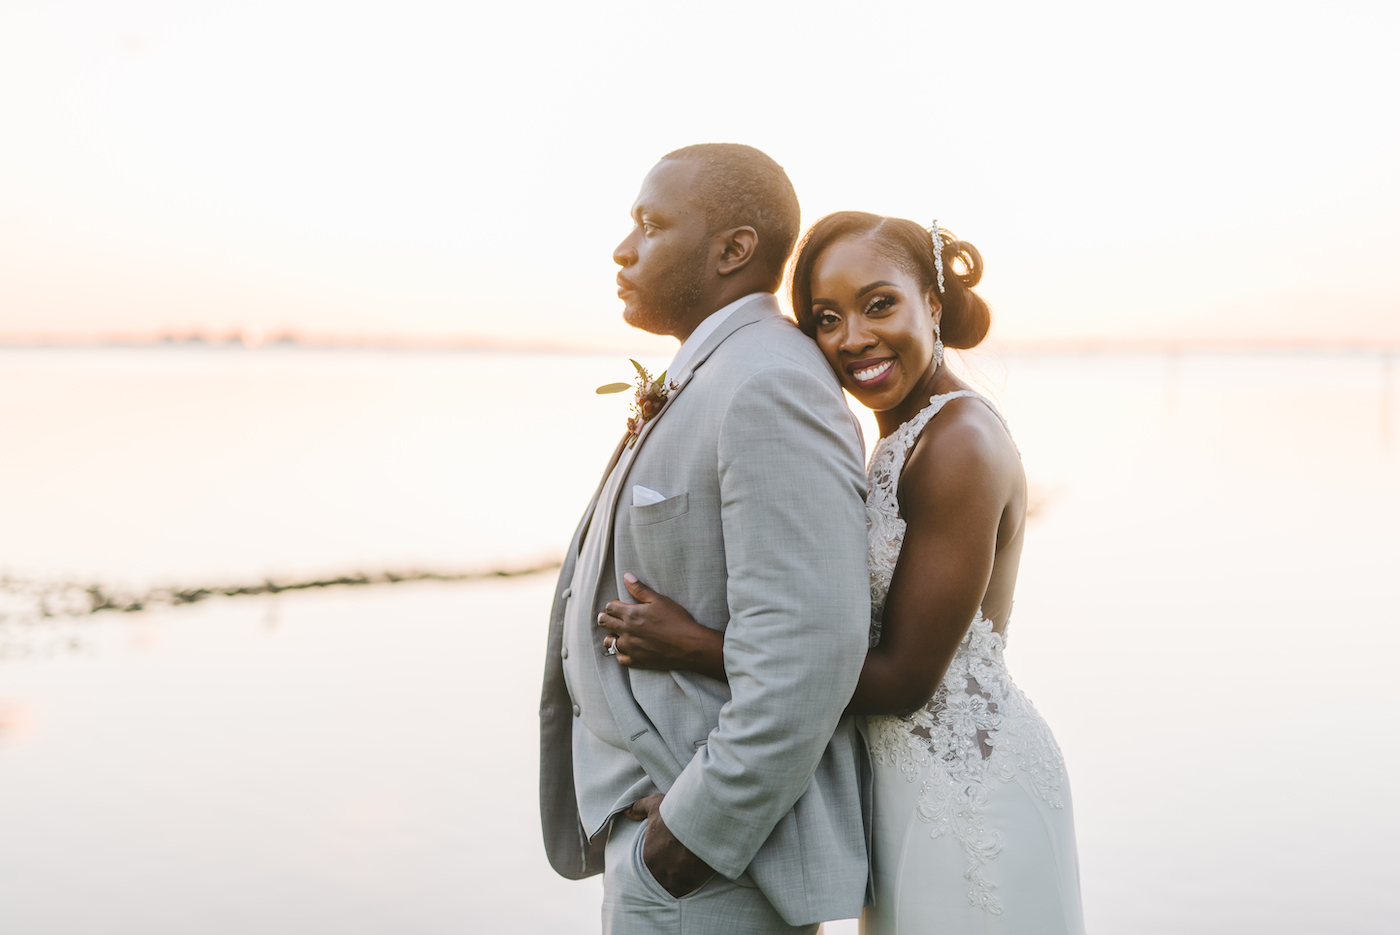 Sarasota Bride and Groom Intimate Embrace on Shores of Gulf Coast | Florida Wedding Photographer Kera Photography